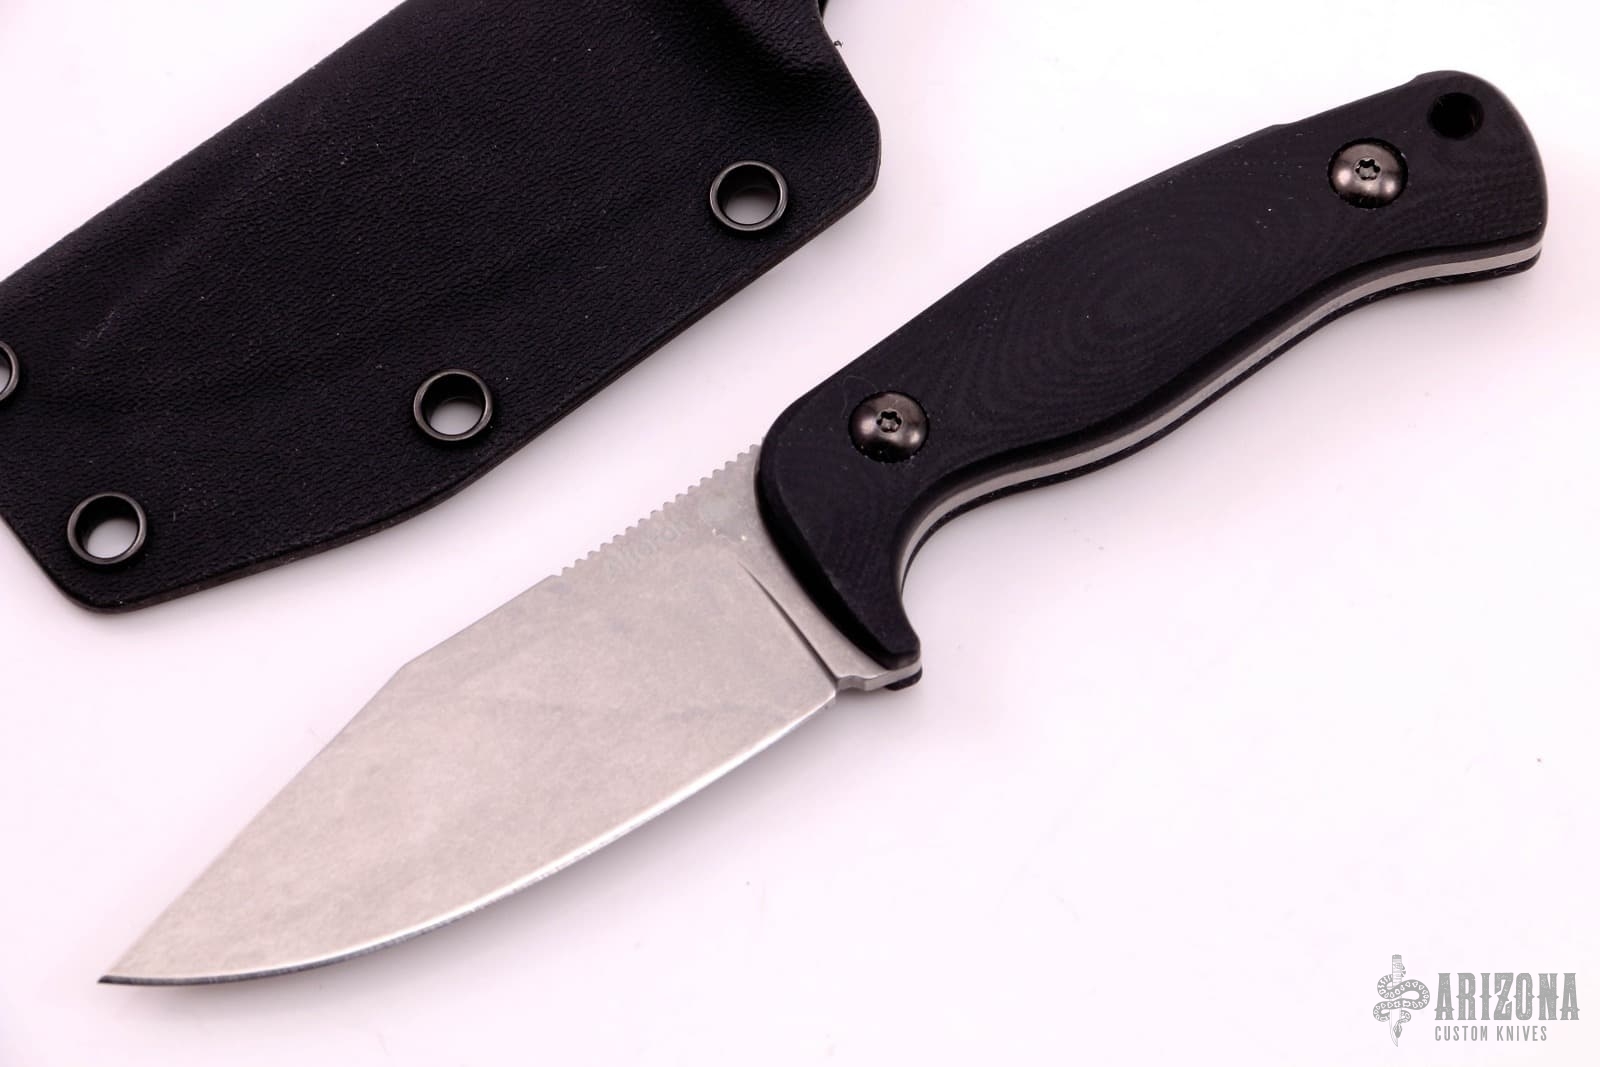 Eklipse - Black G-10 | Arizona Custom Knives